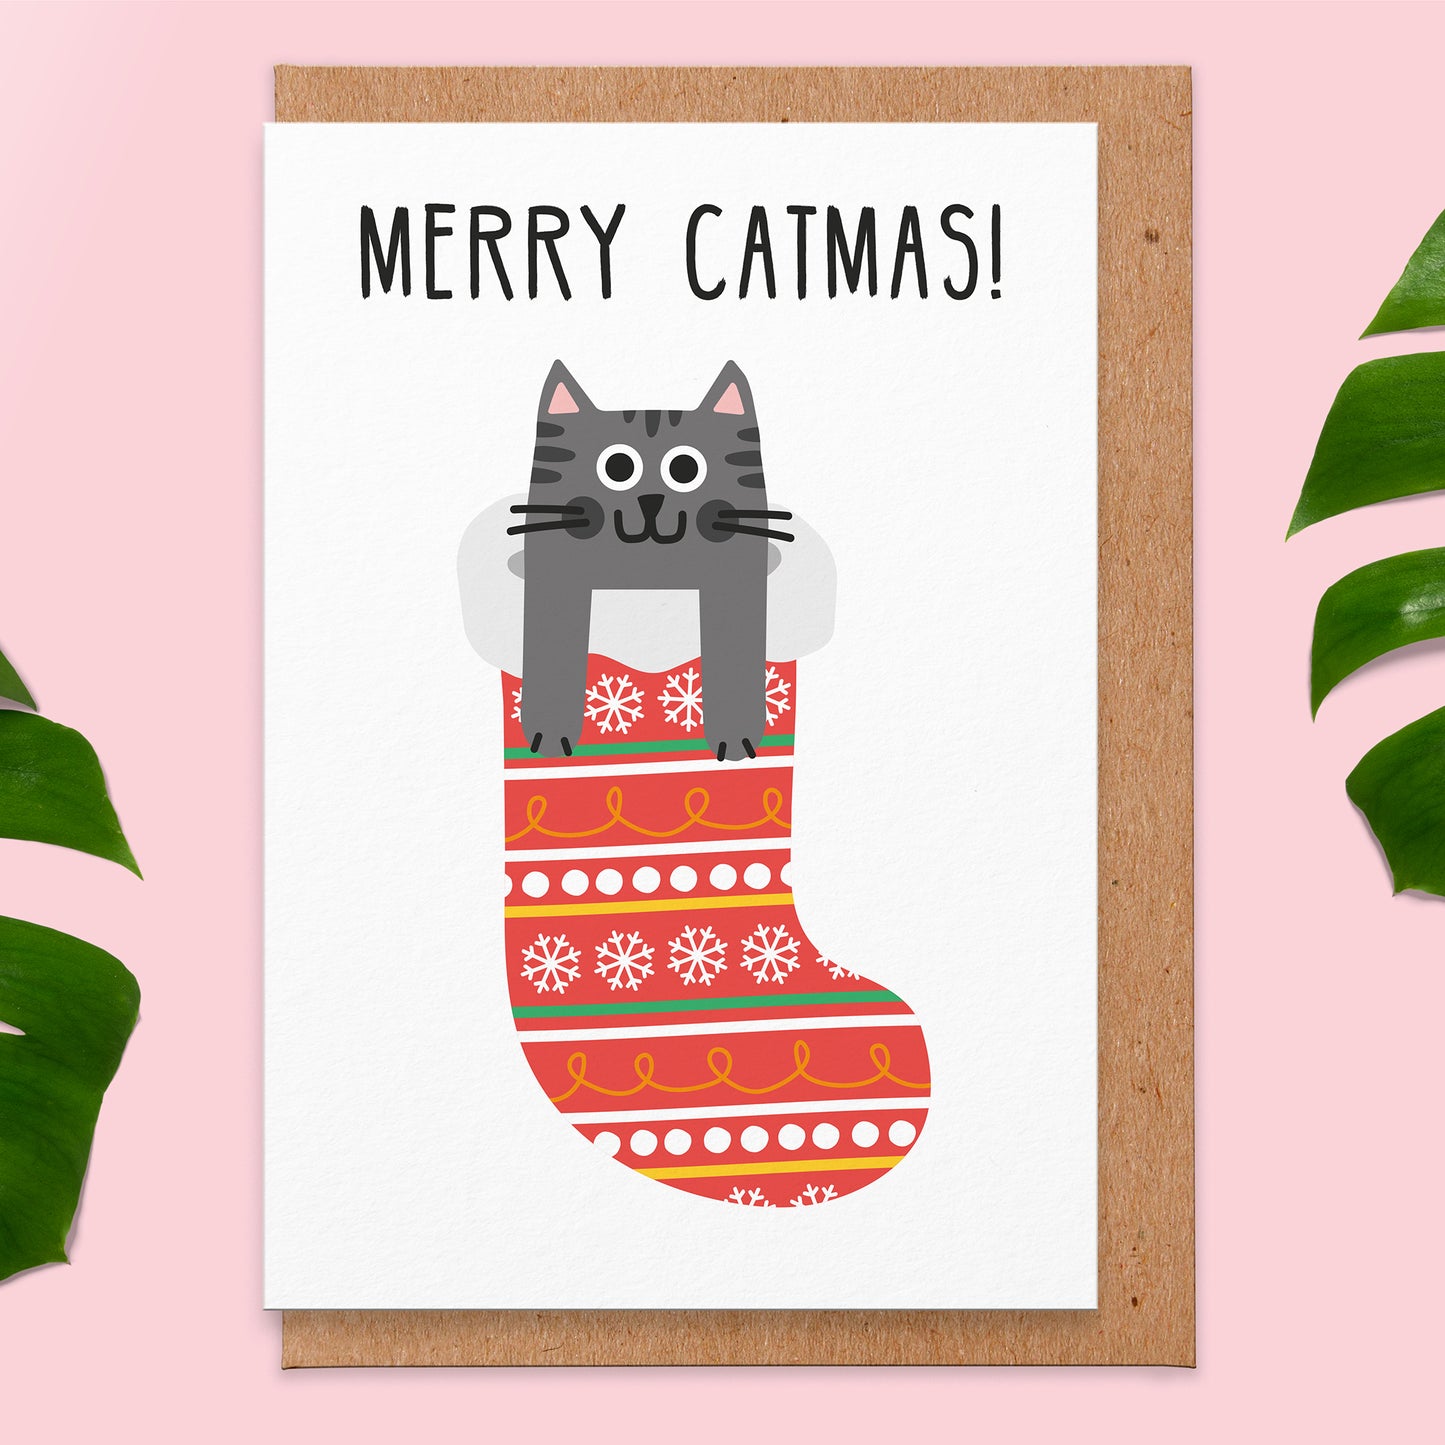 Merry catmas Christmas Card